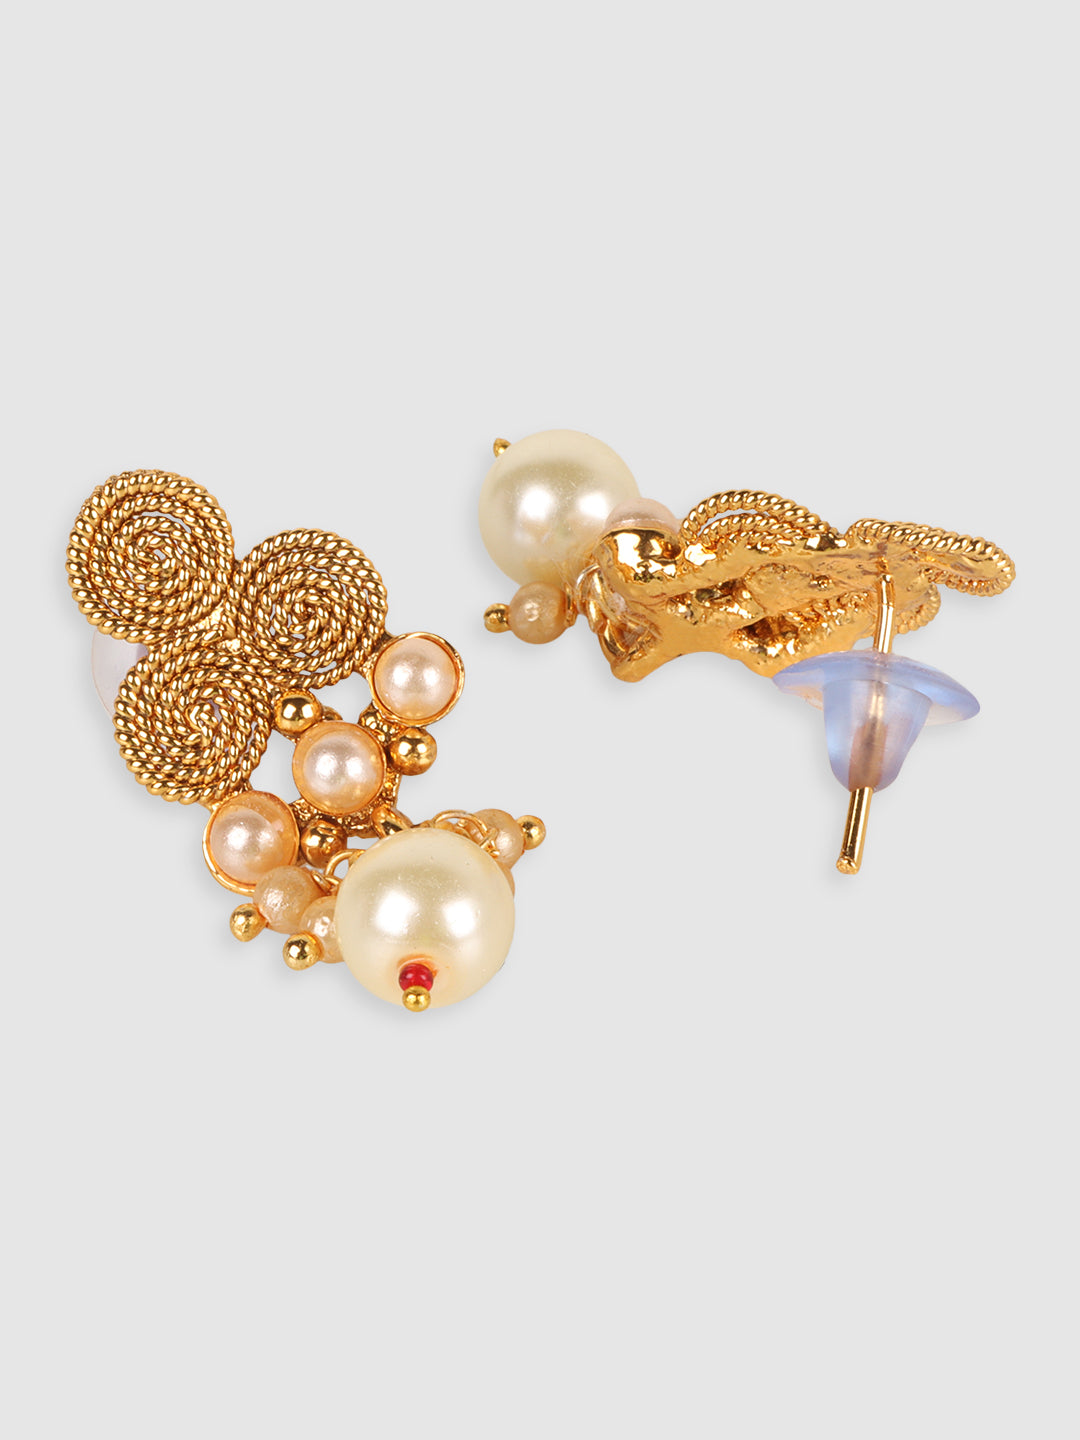 Gold-Plated Spiral Design Jewellery Set